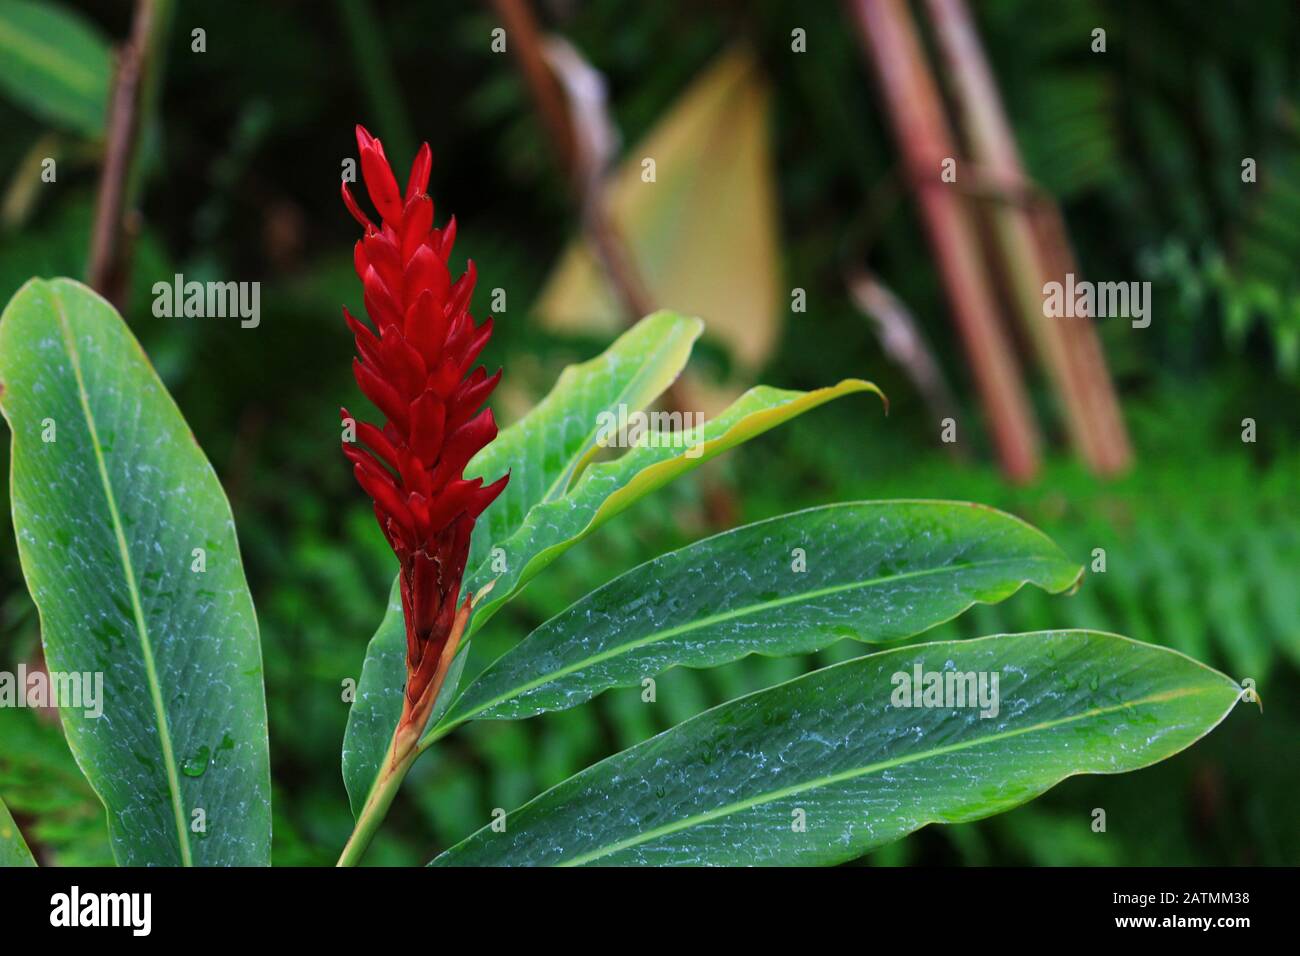 Tropical plant Alpinia purpurata with bright red bracts Stock Photo